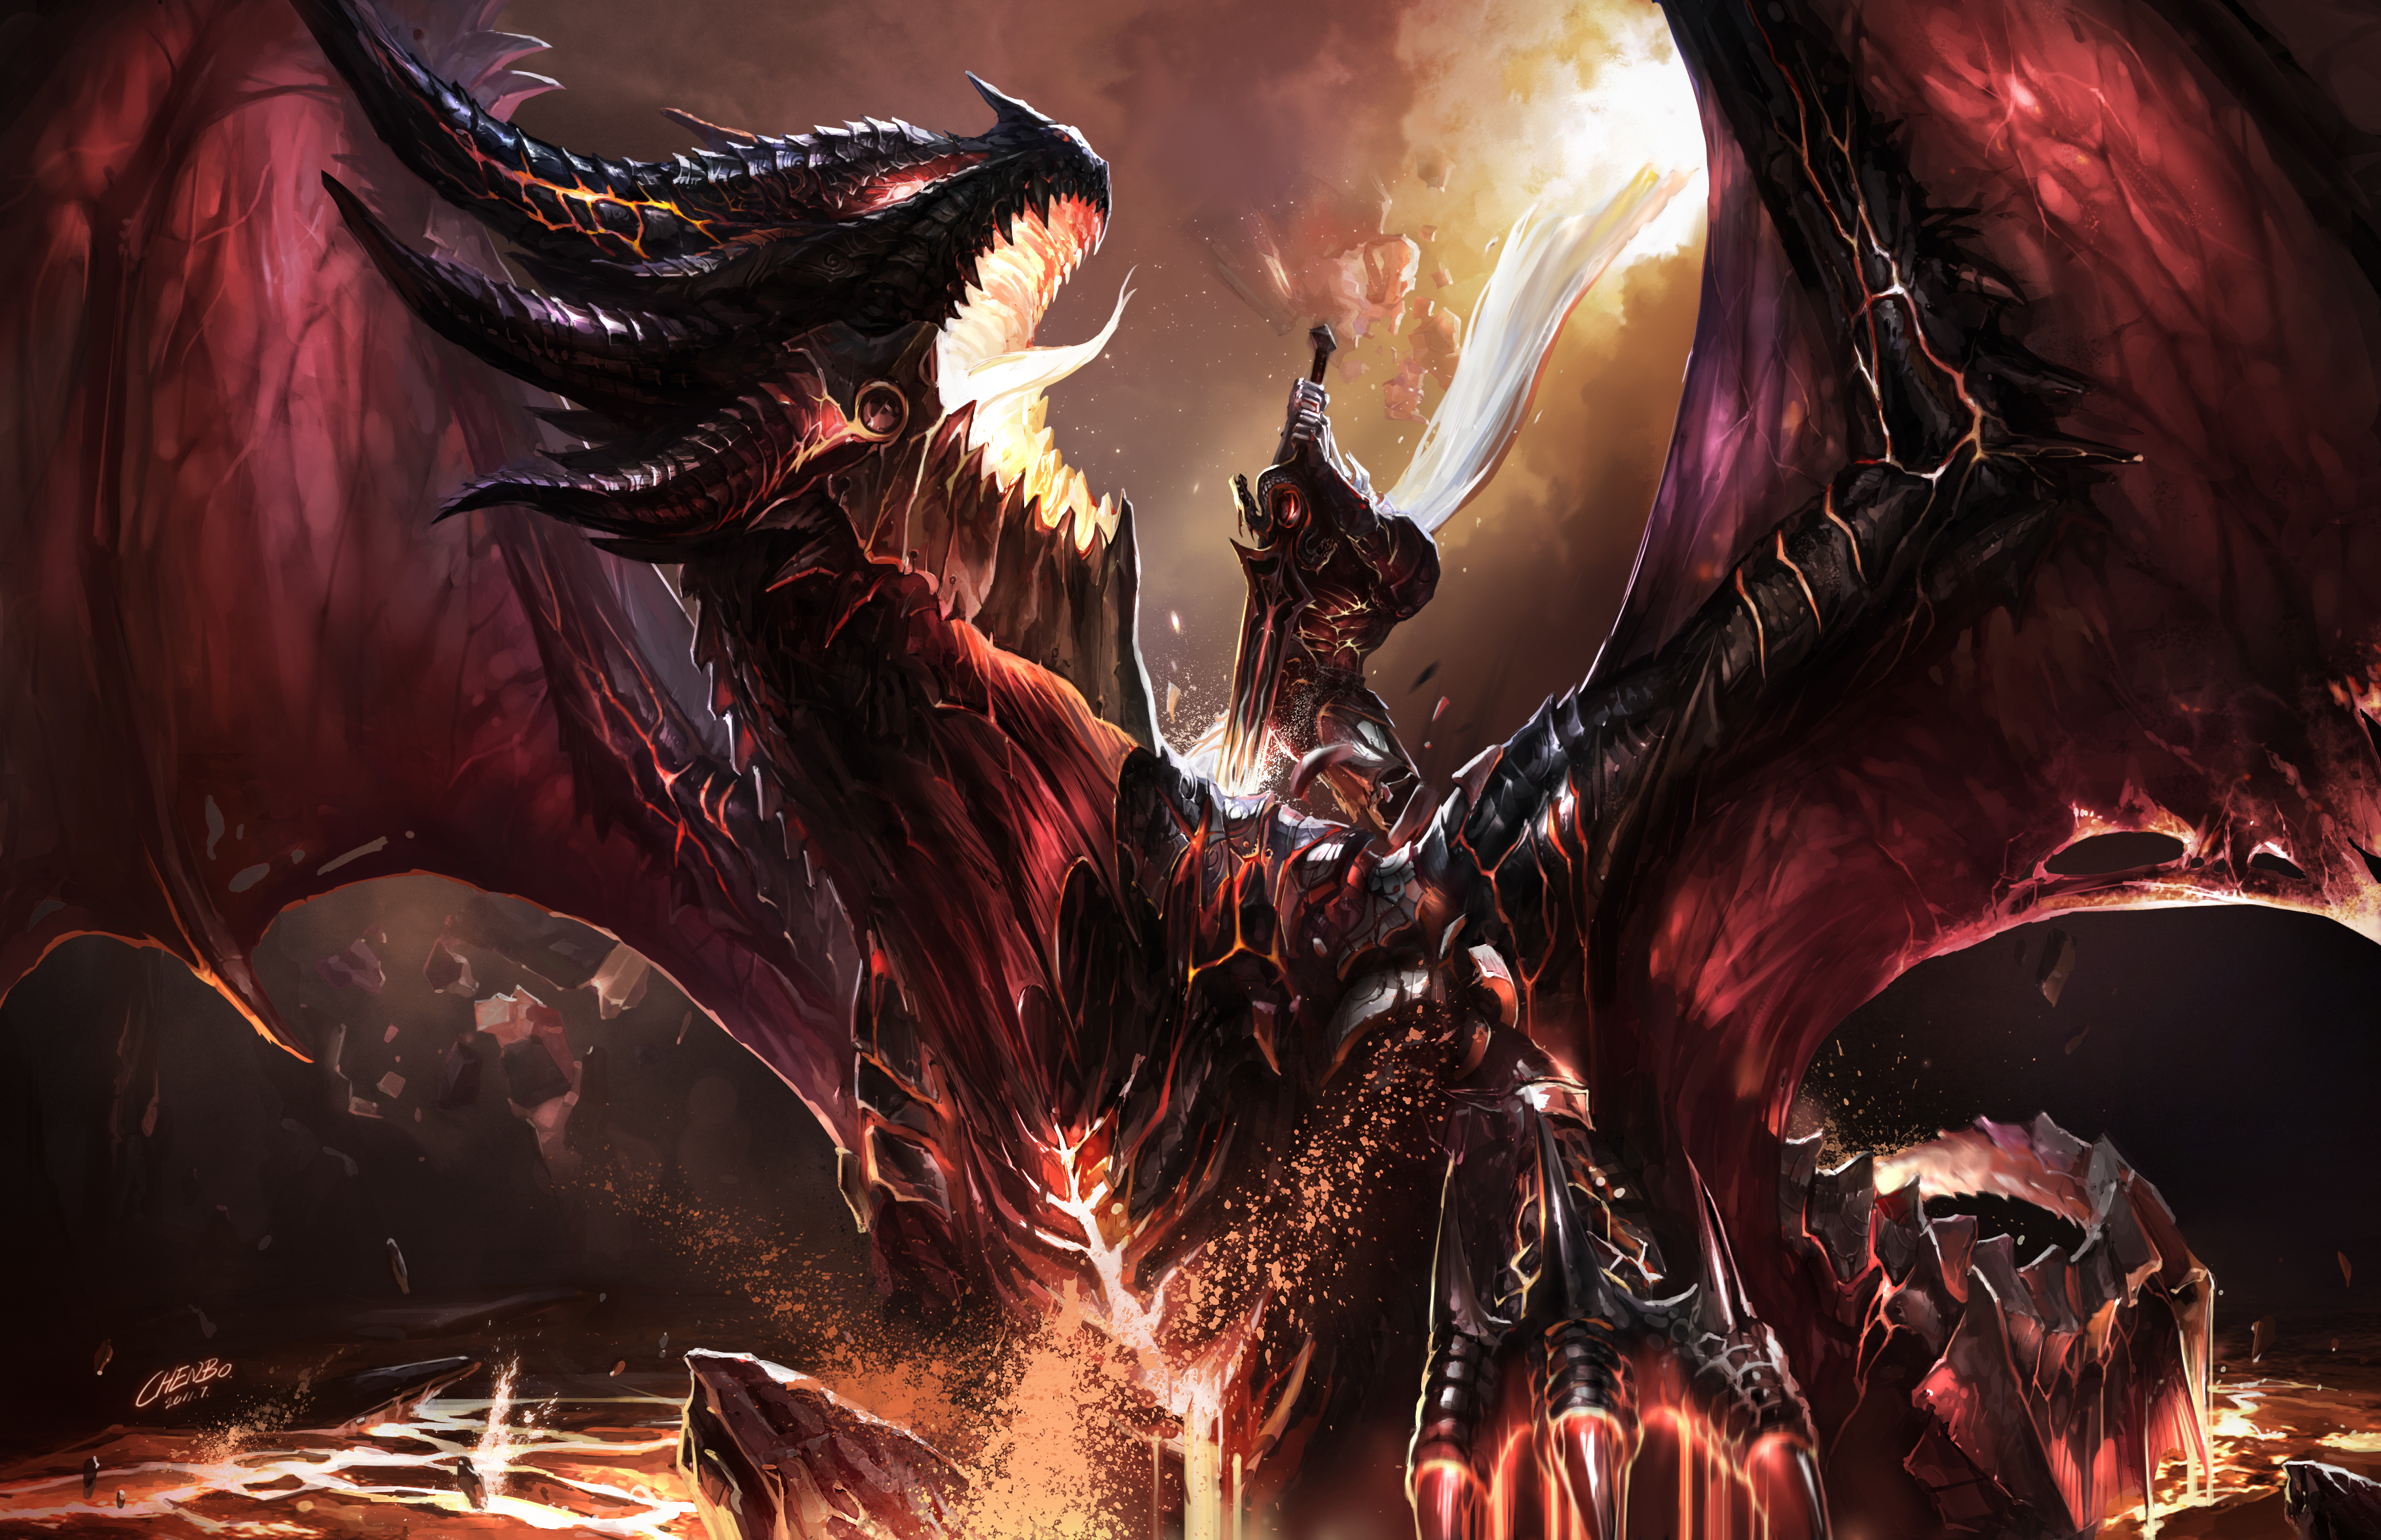 Chenbo Fantasy Art Armor Dragon Weapon Sword Lava Knight Warcraft World Of Warcraft Deathwing 3508x2269